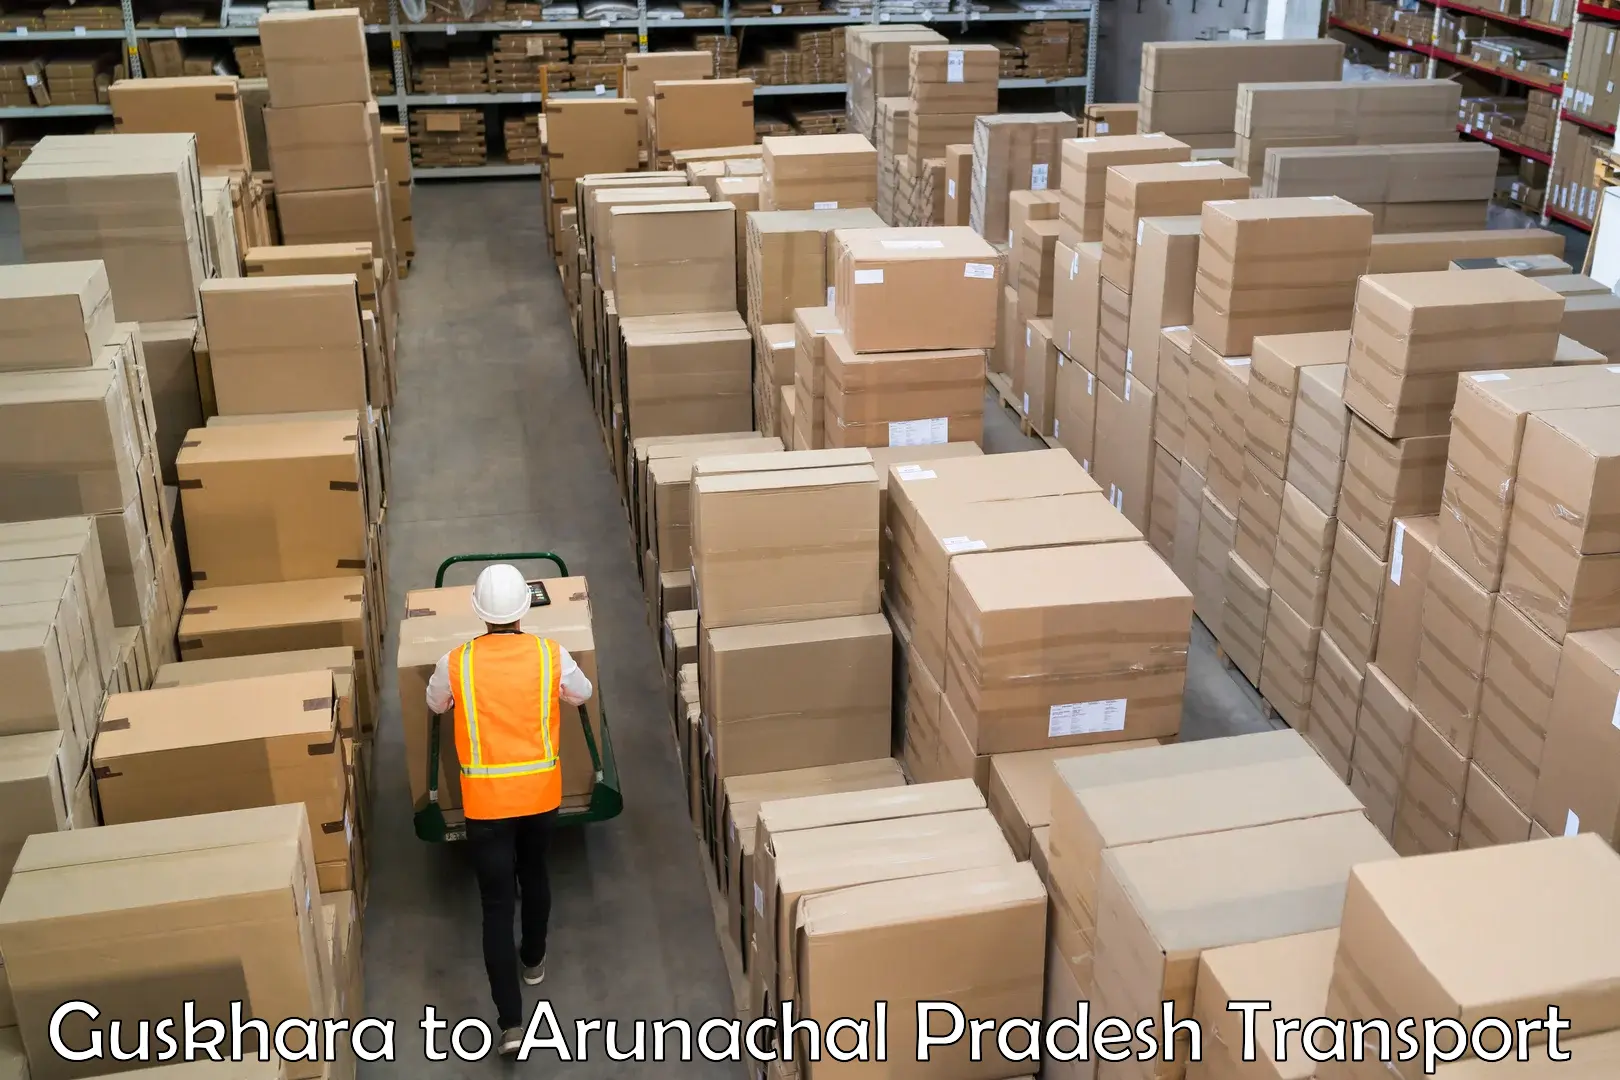 Truck transport companies in India Guskhara to Arunachal Pradesh